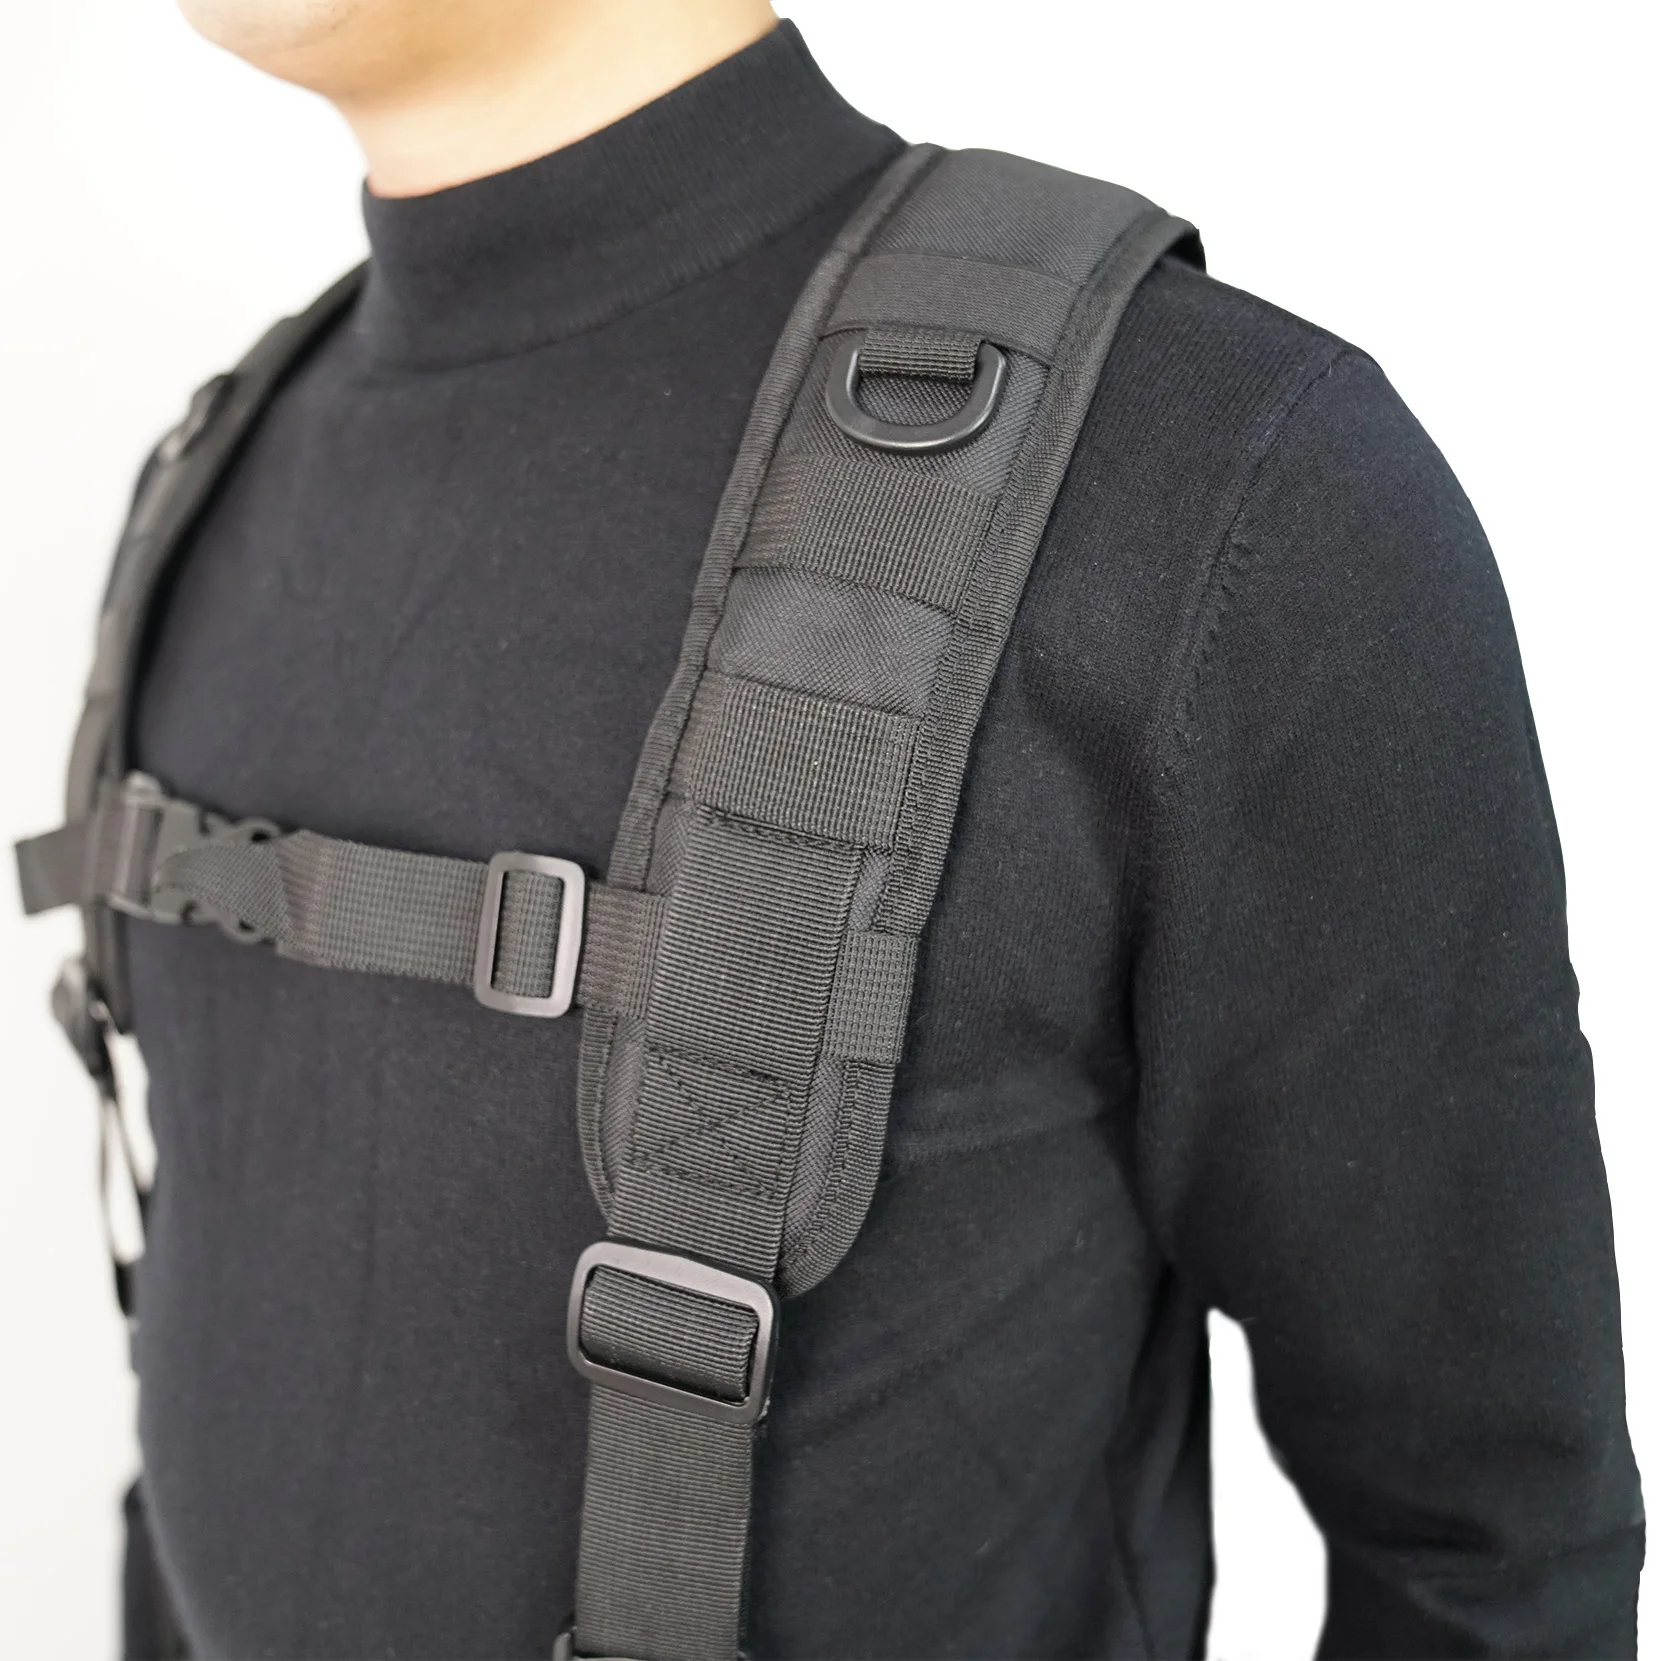 MELOTOUGH Tactical Outdoor H-Harness Duty Belt Suspenders (Battle Belt not Included) Adjust Suspender подтяжки тактические